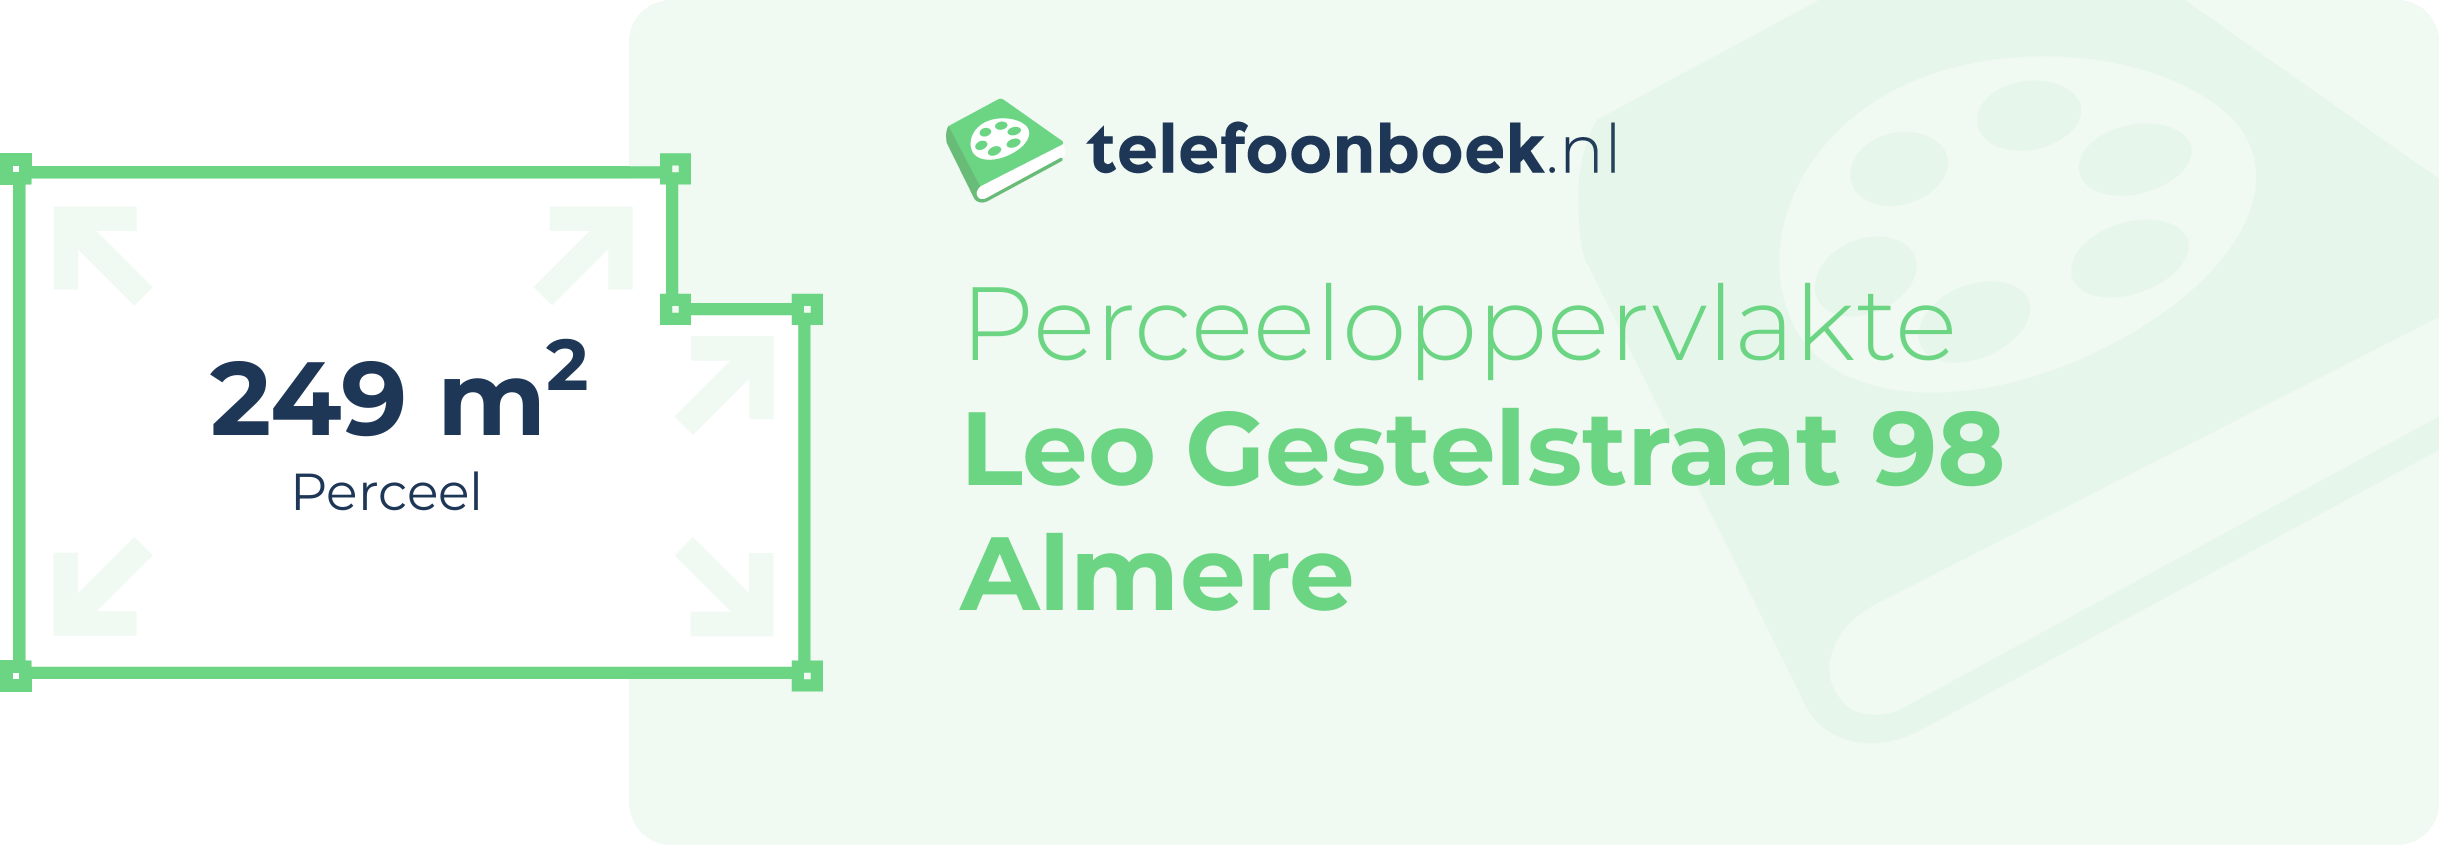 Perceeloppervlakte Leo Gestelstraat 98 Almere